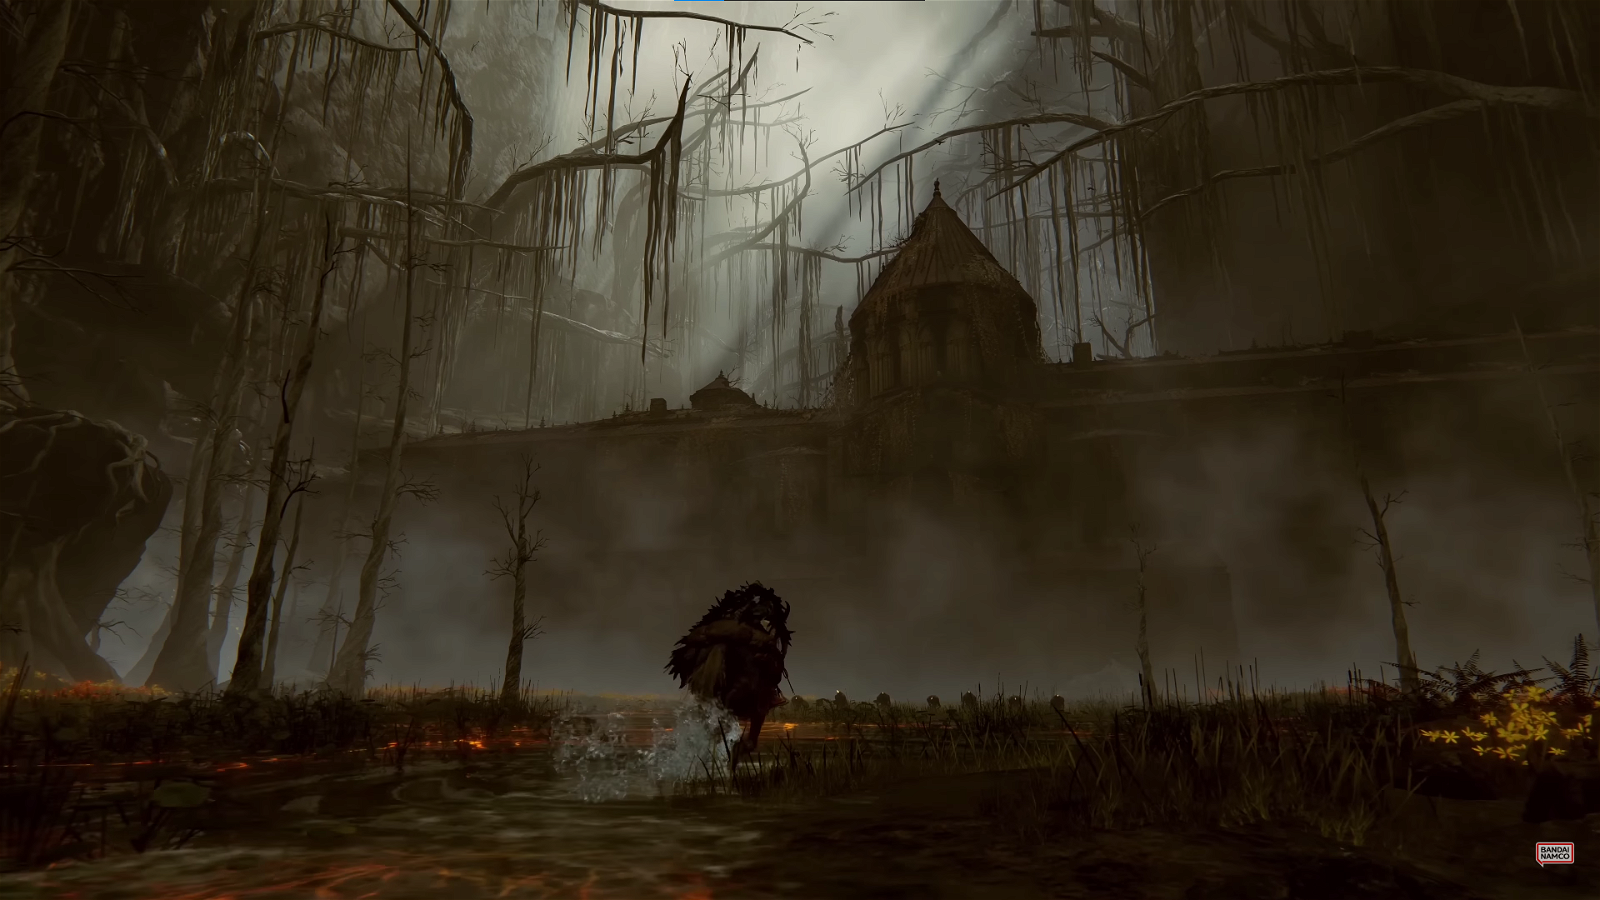 New Poisoned Swamp teased in DLC Gameplay Trailer